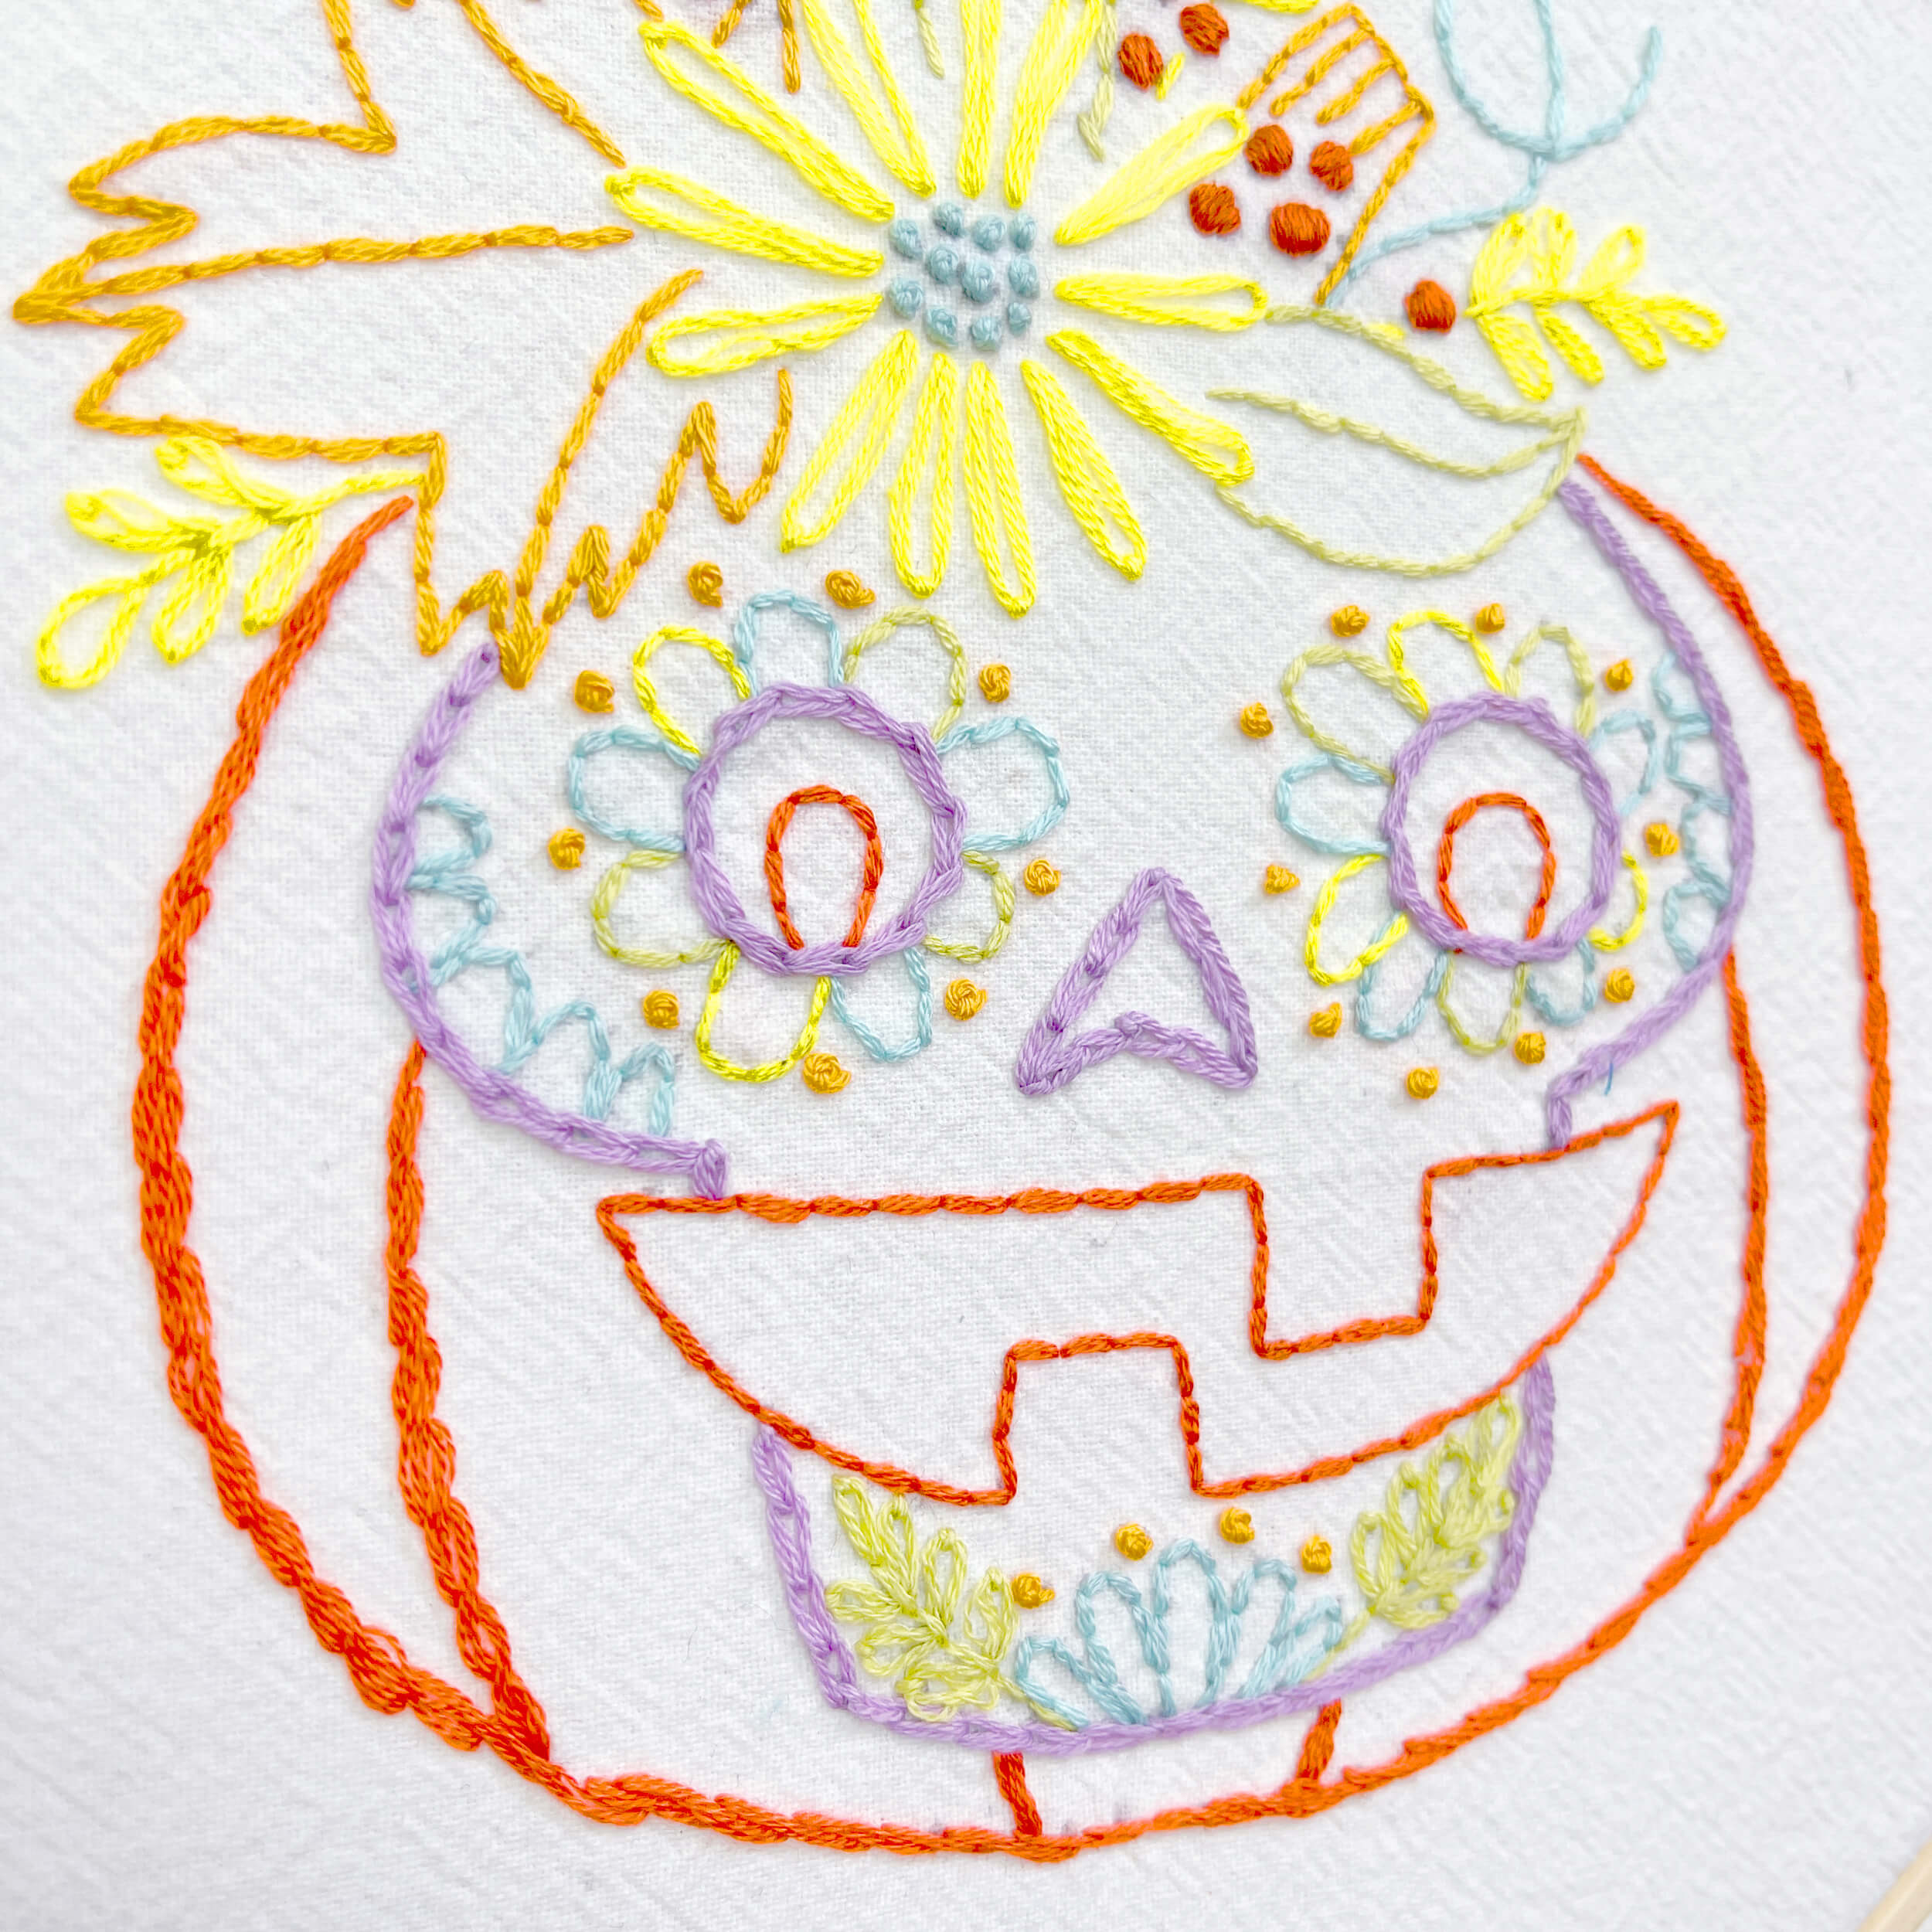 Sugar Skull-O'-Lantern embroidery pattern